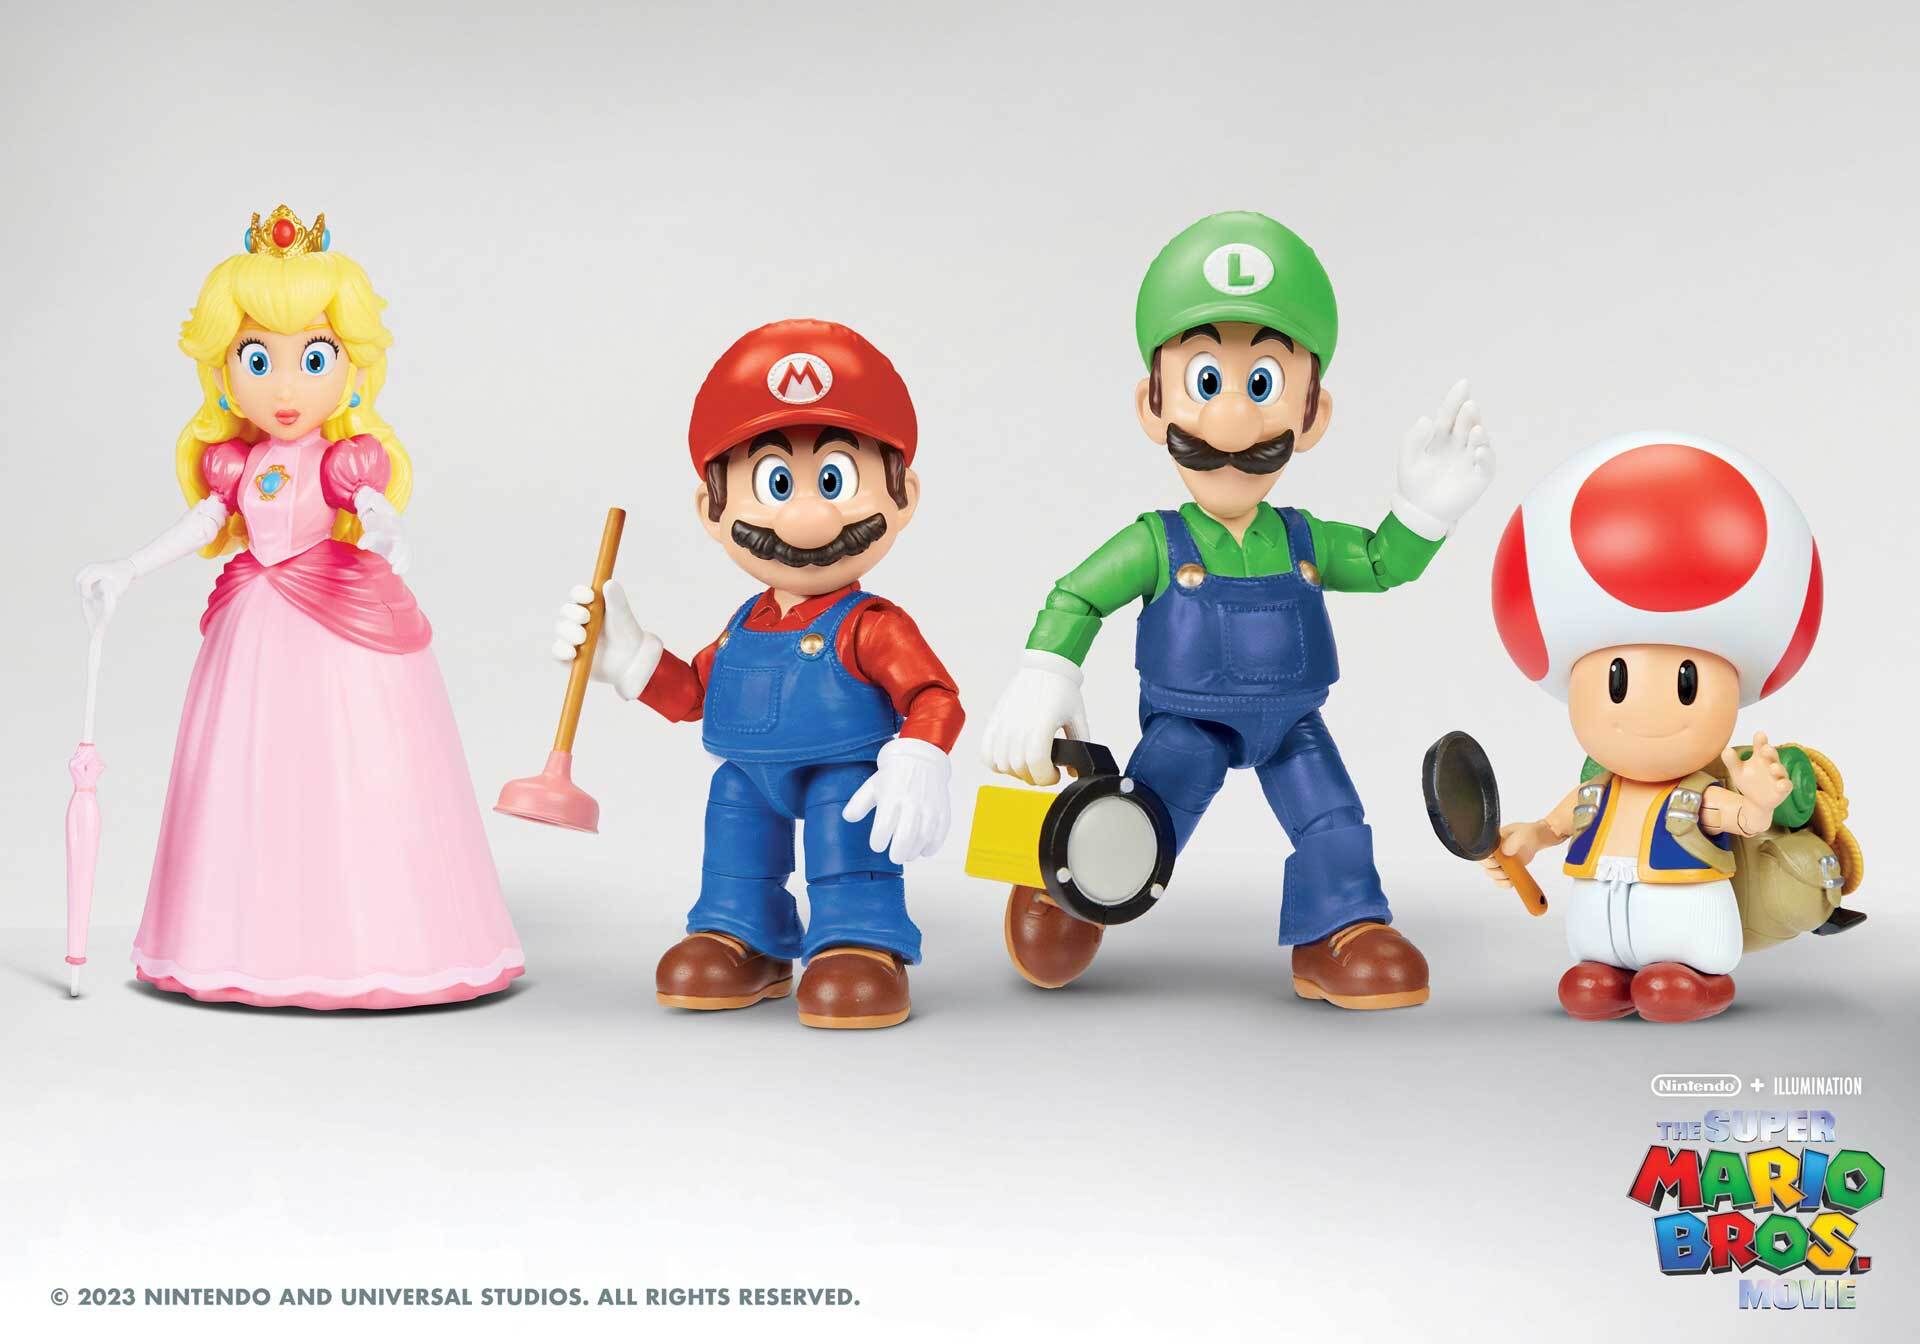 Super Mario Bros. Movie Toyline Revealed GameSpot